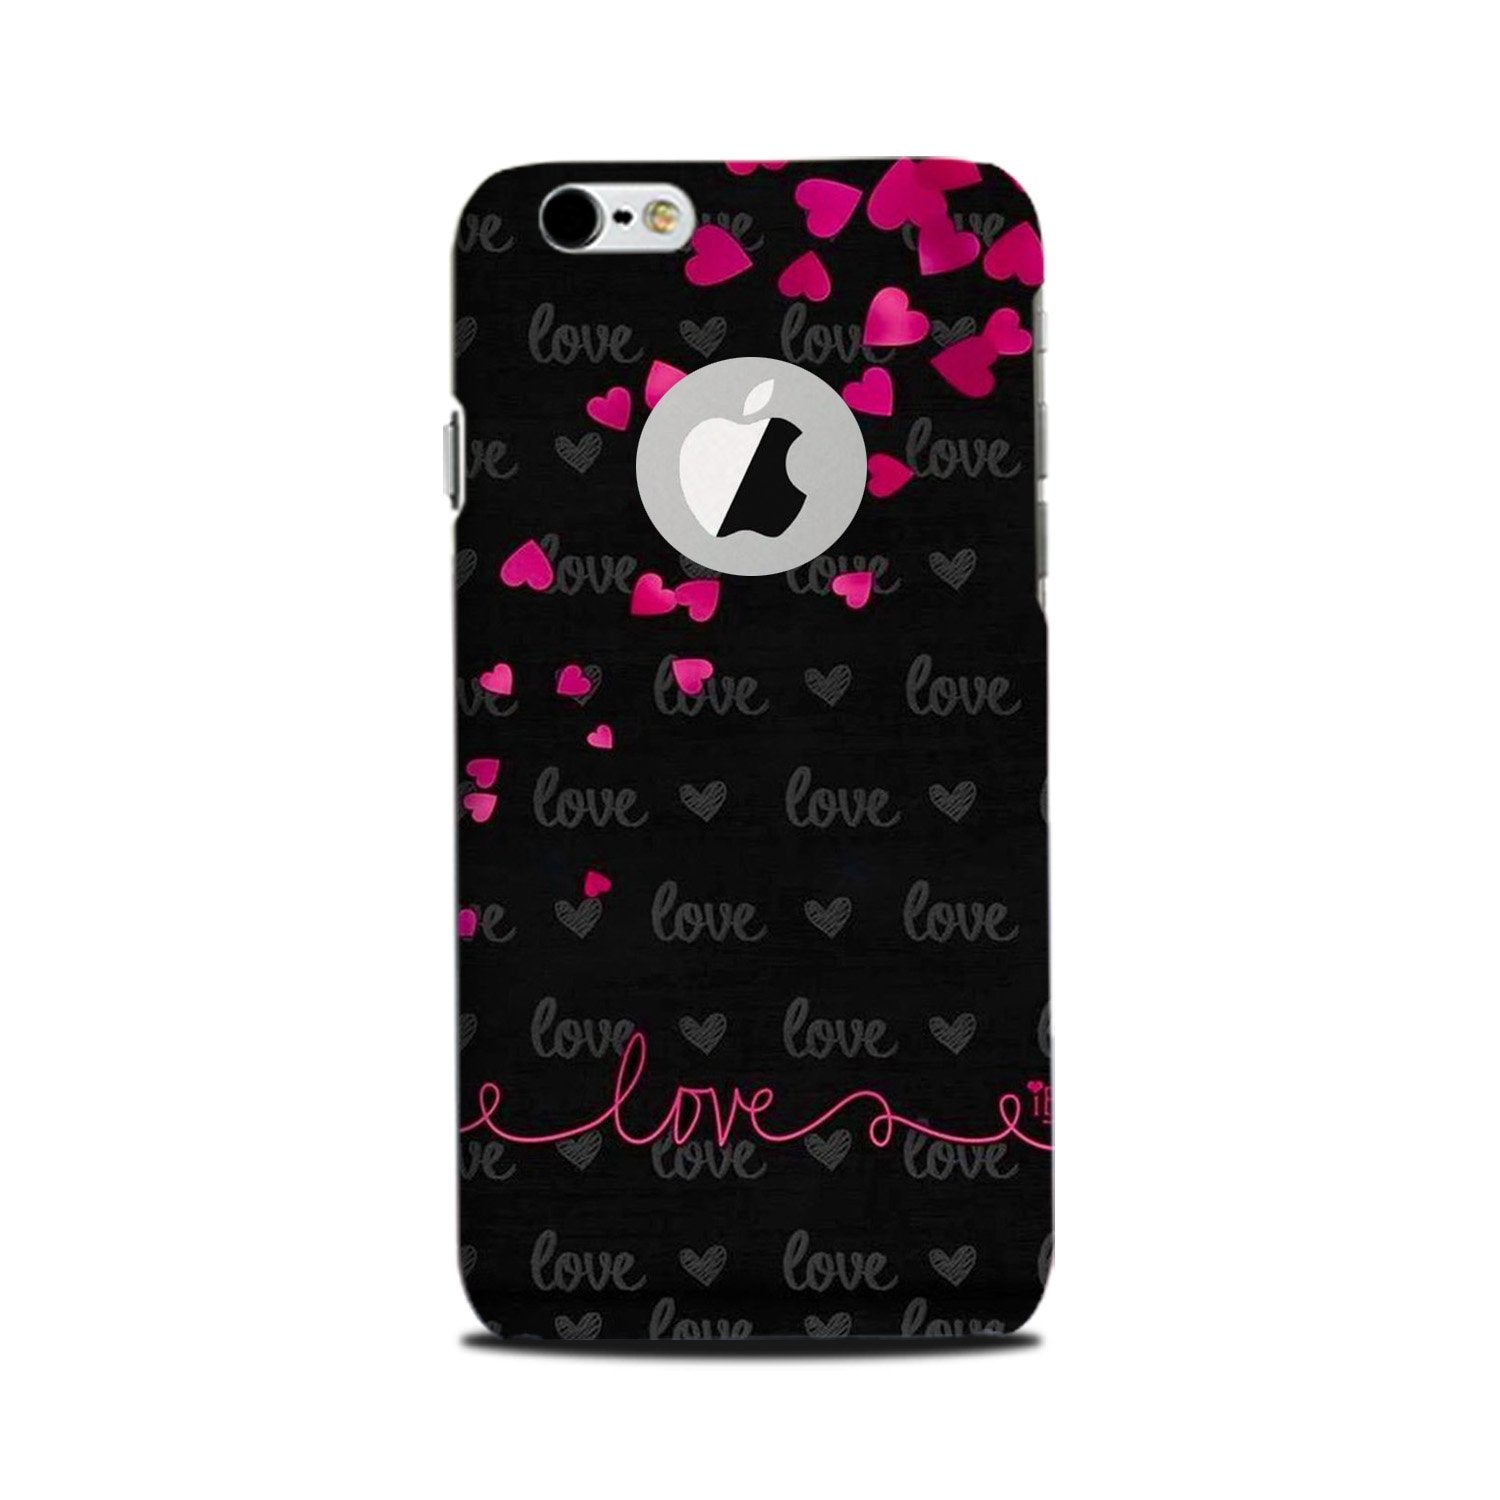 Love in Air Case for iPhone 6 Plus / 6s Plus logo cut 